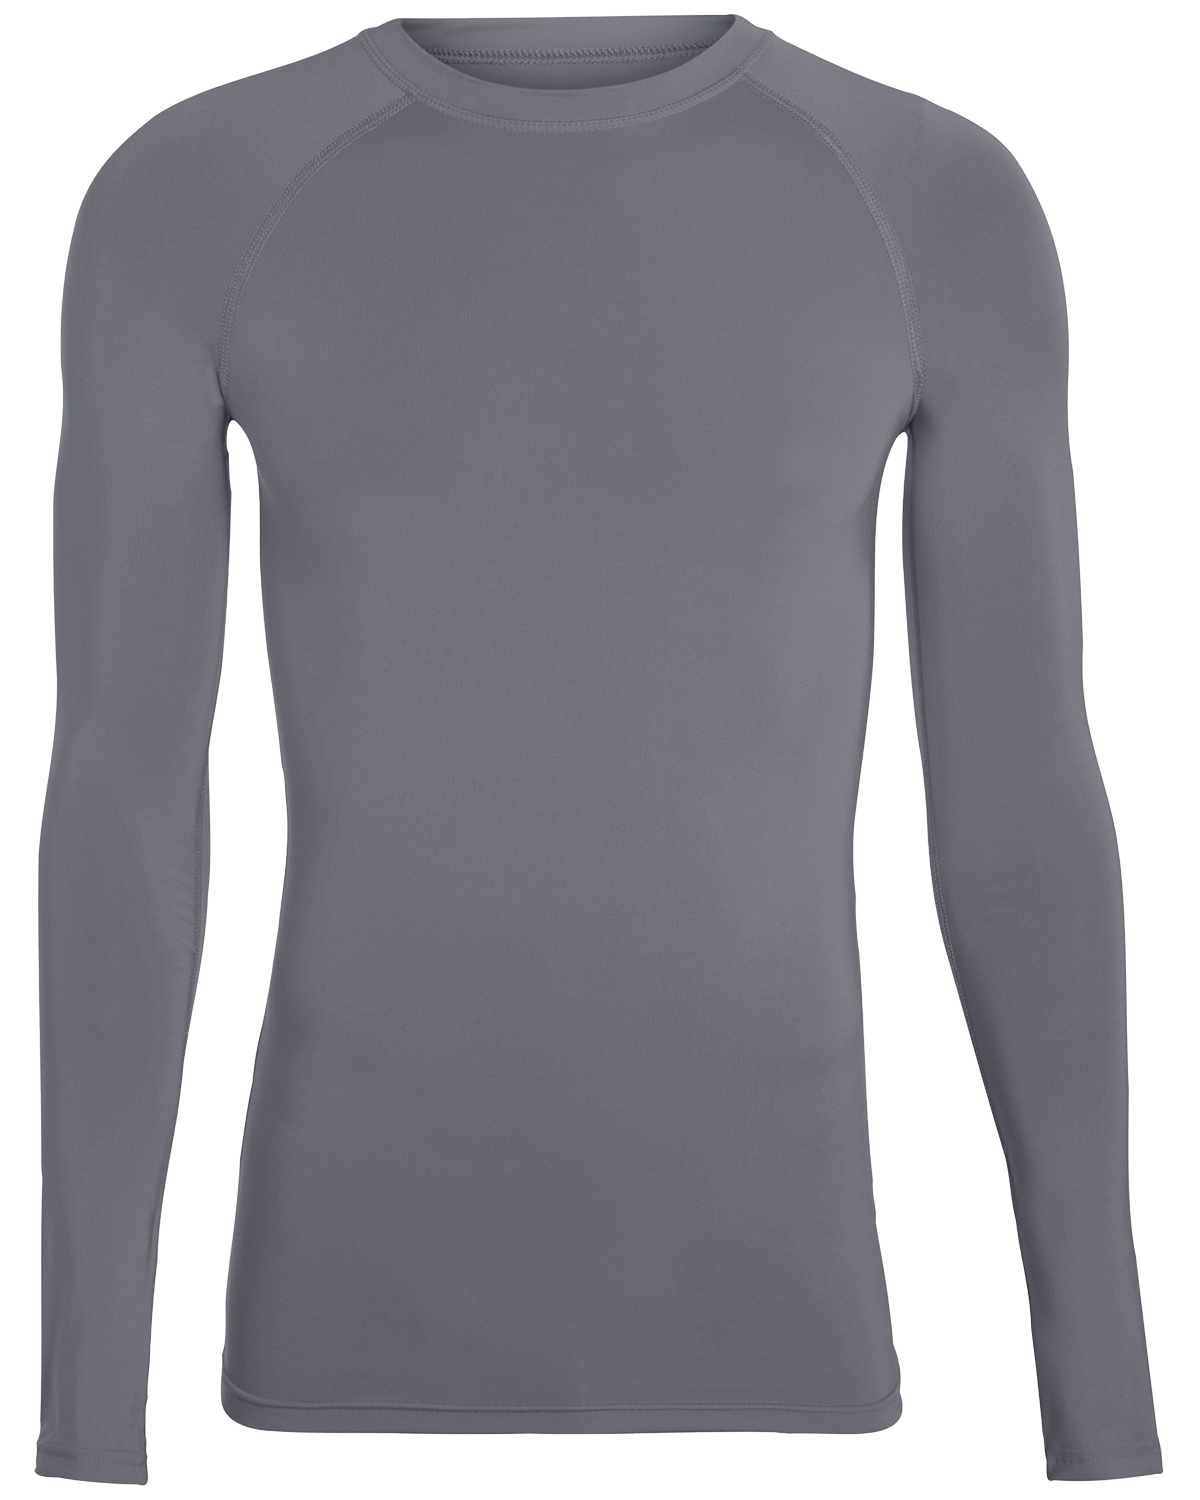 Augusta Hyperform Sleeveless Compression Shirt